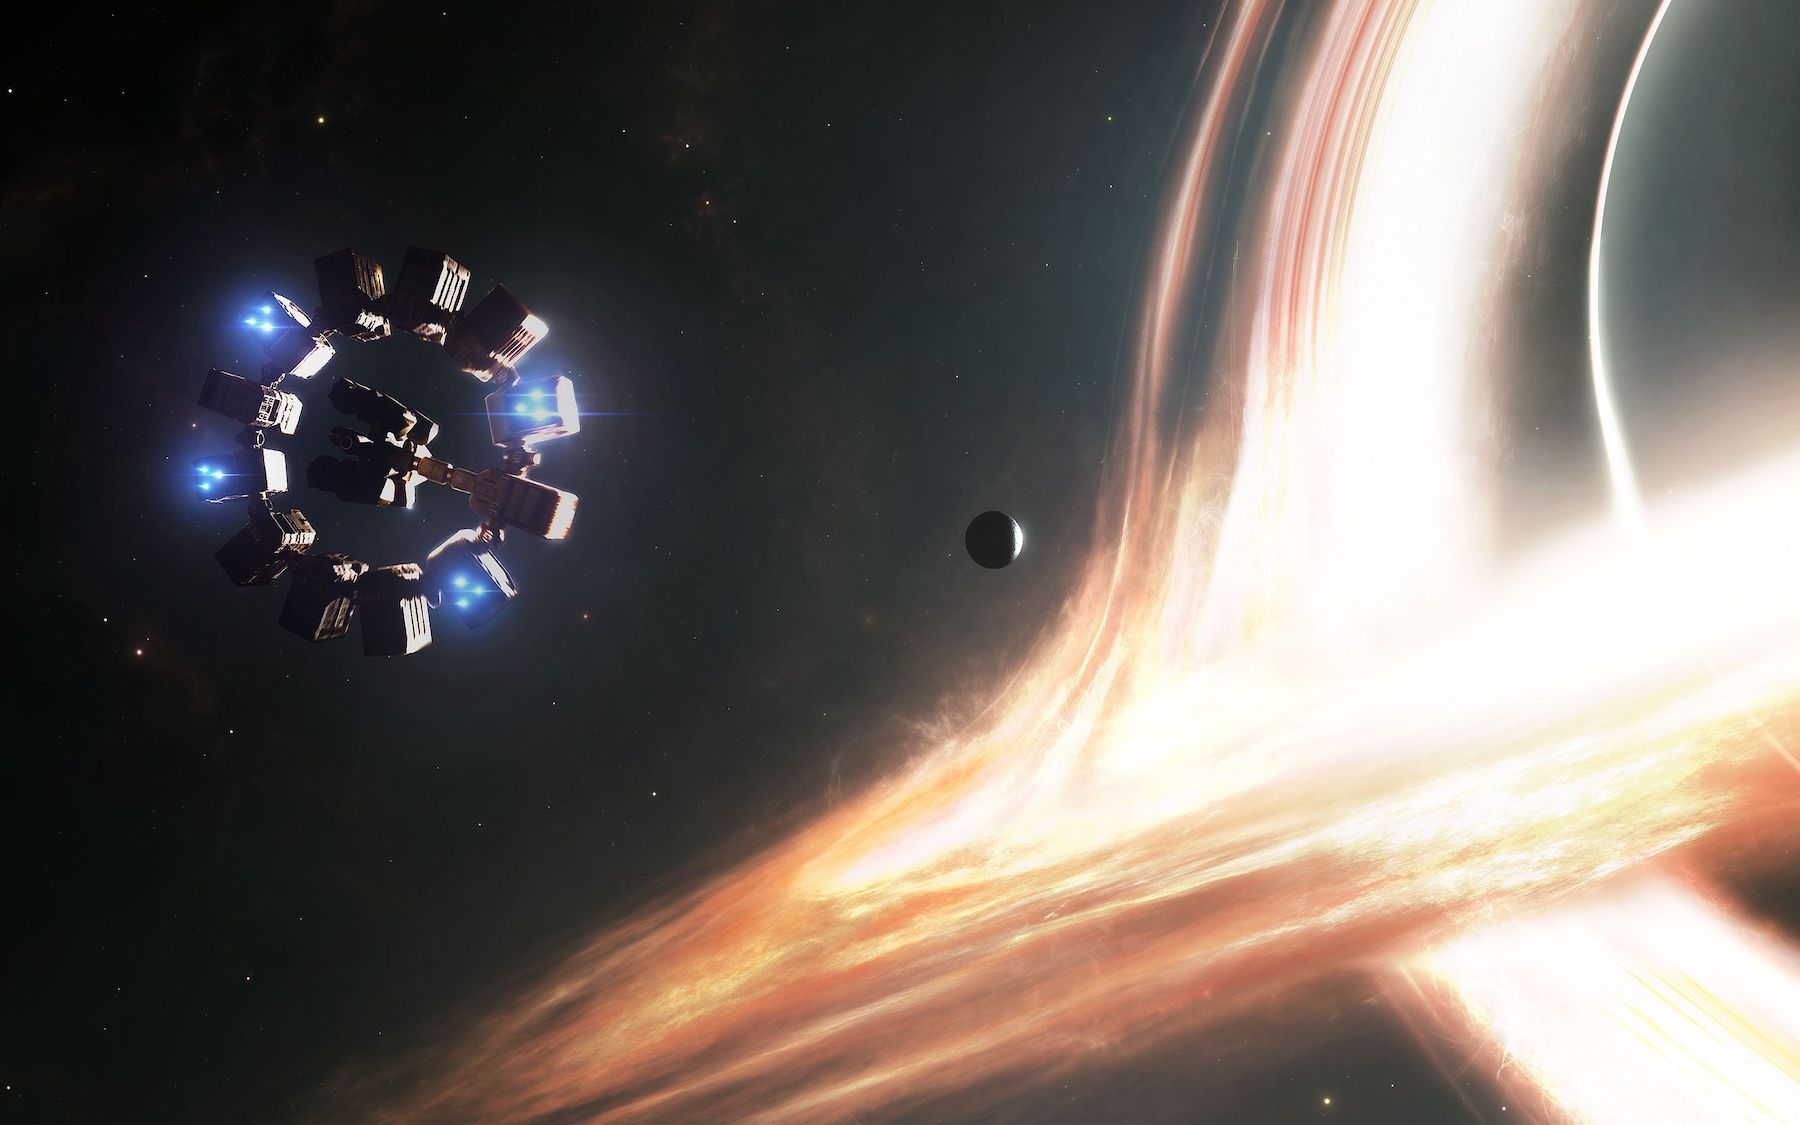 Christopher Nolan's Interstellar: A Secular End Times Myth